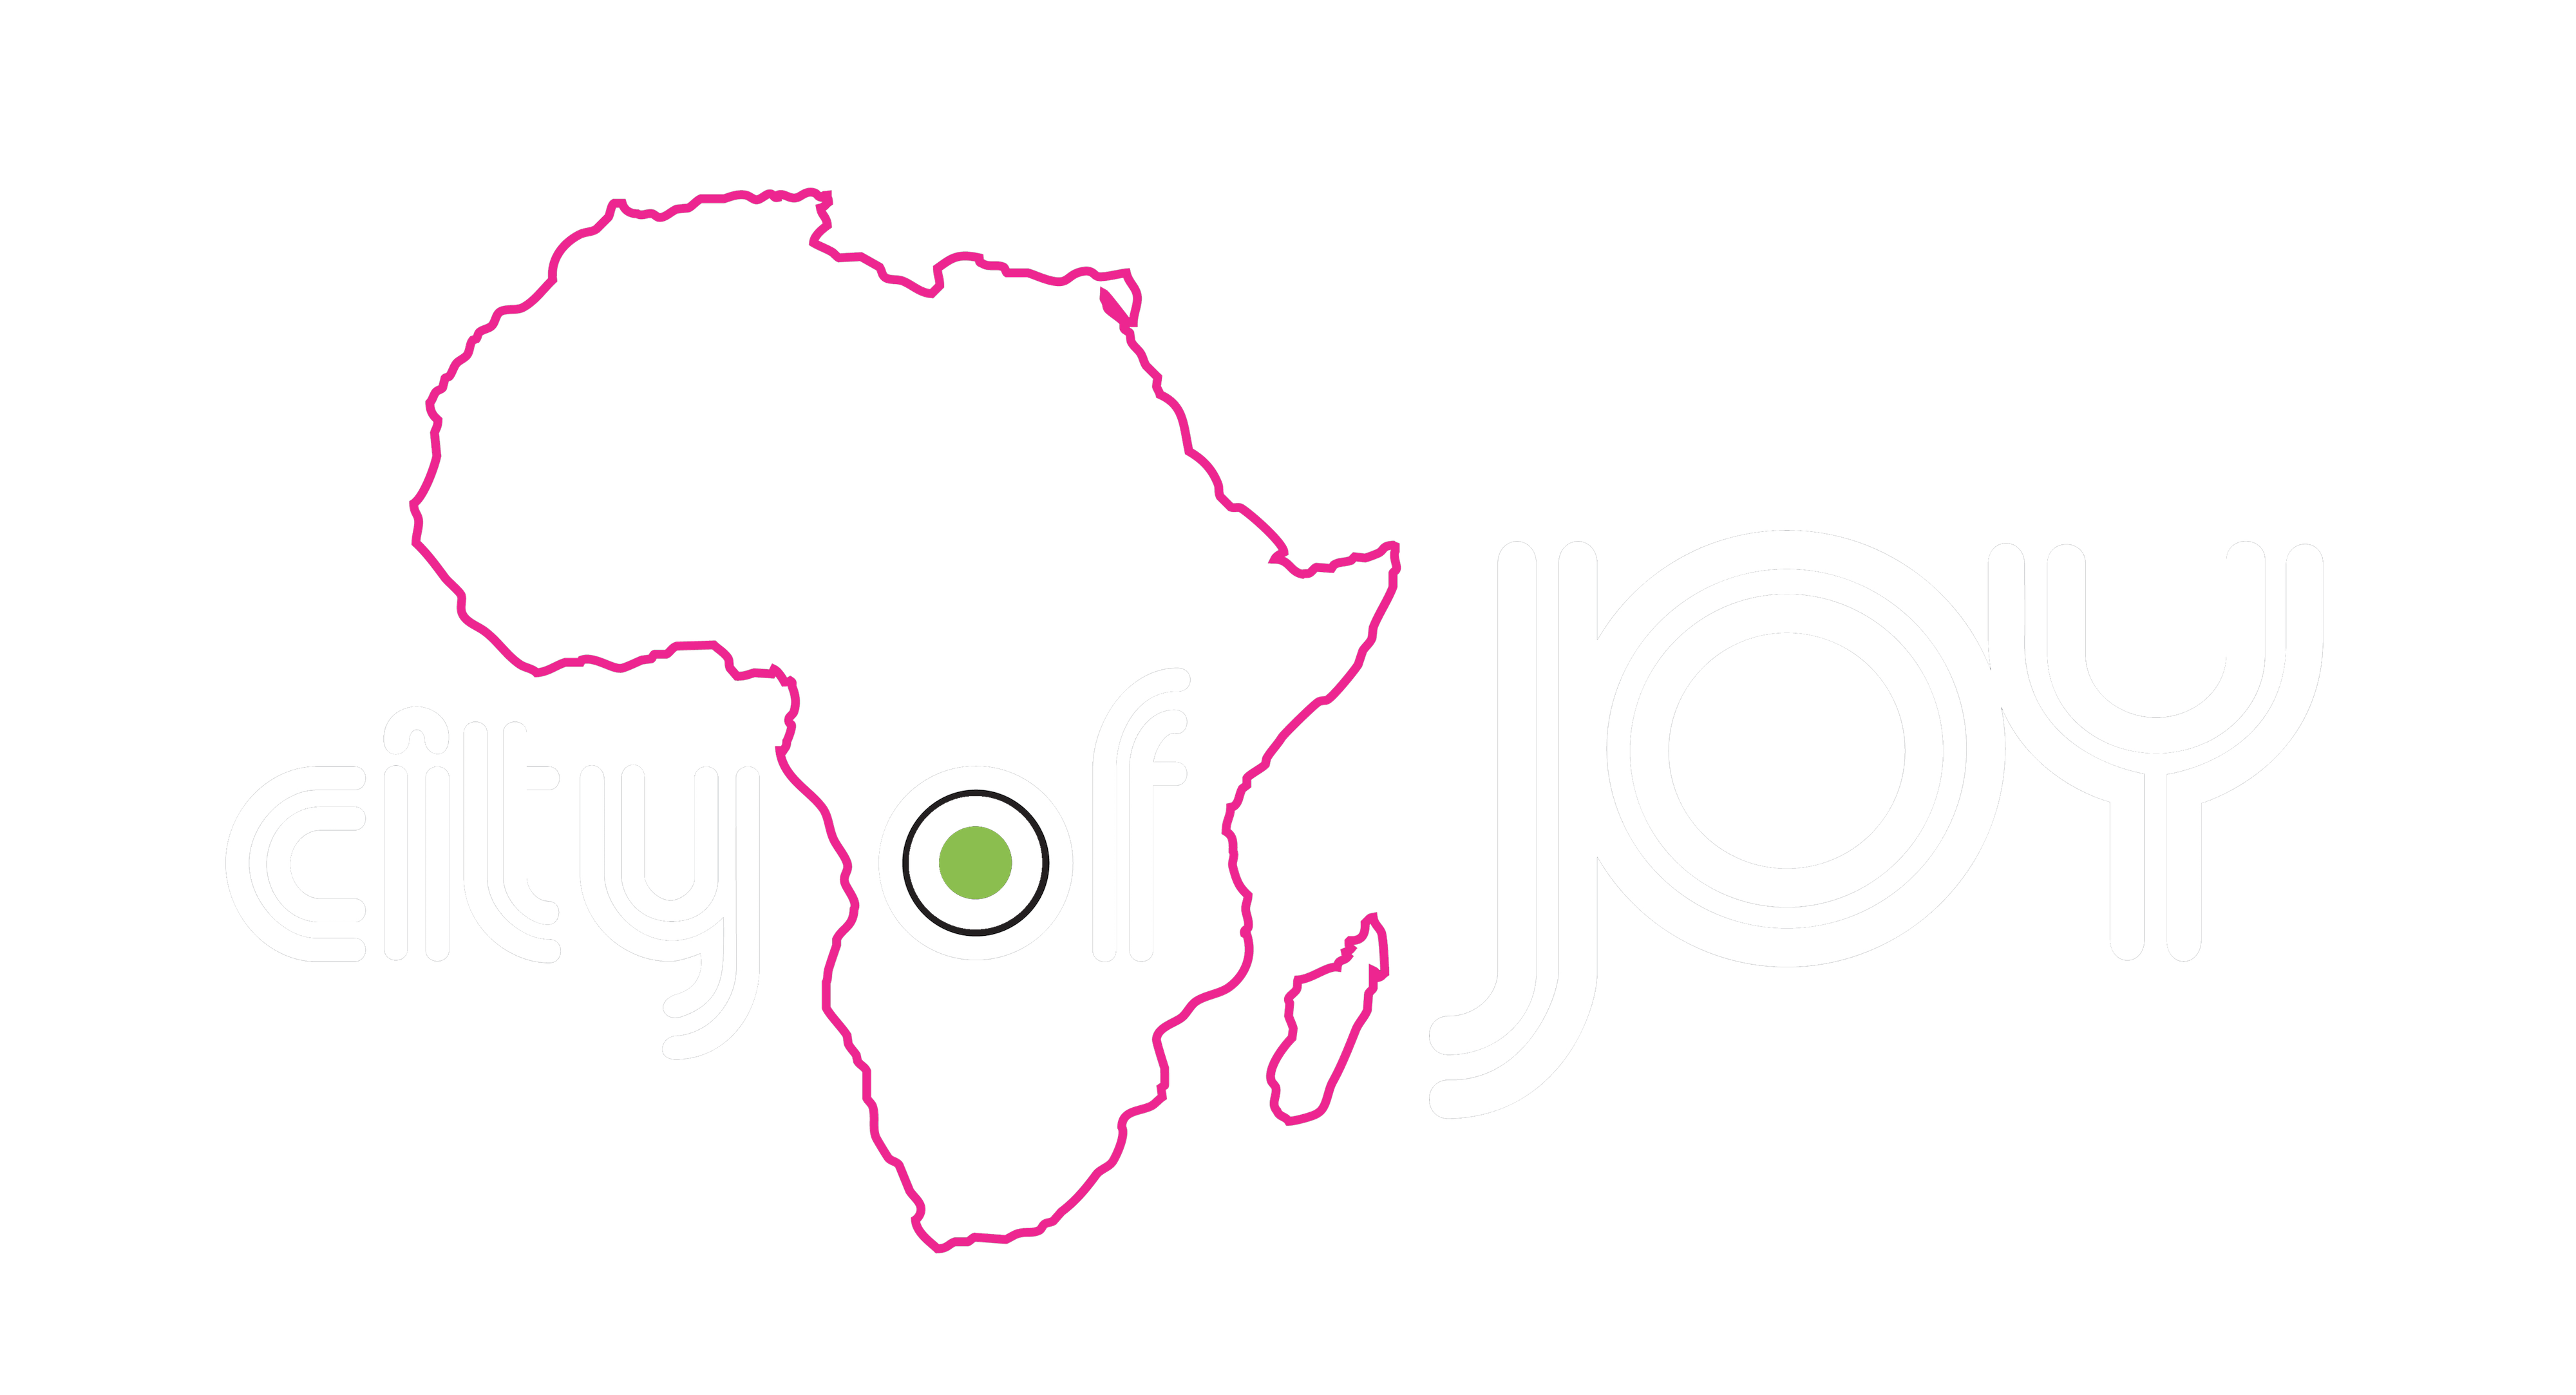 cityofjoy logo